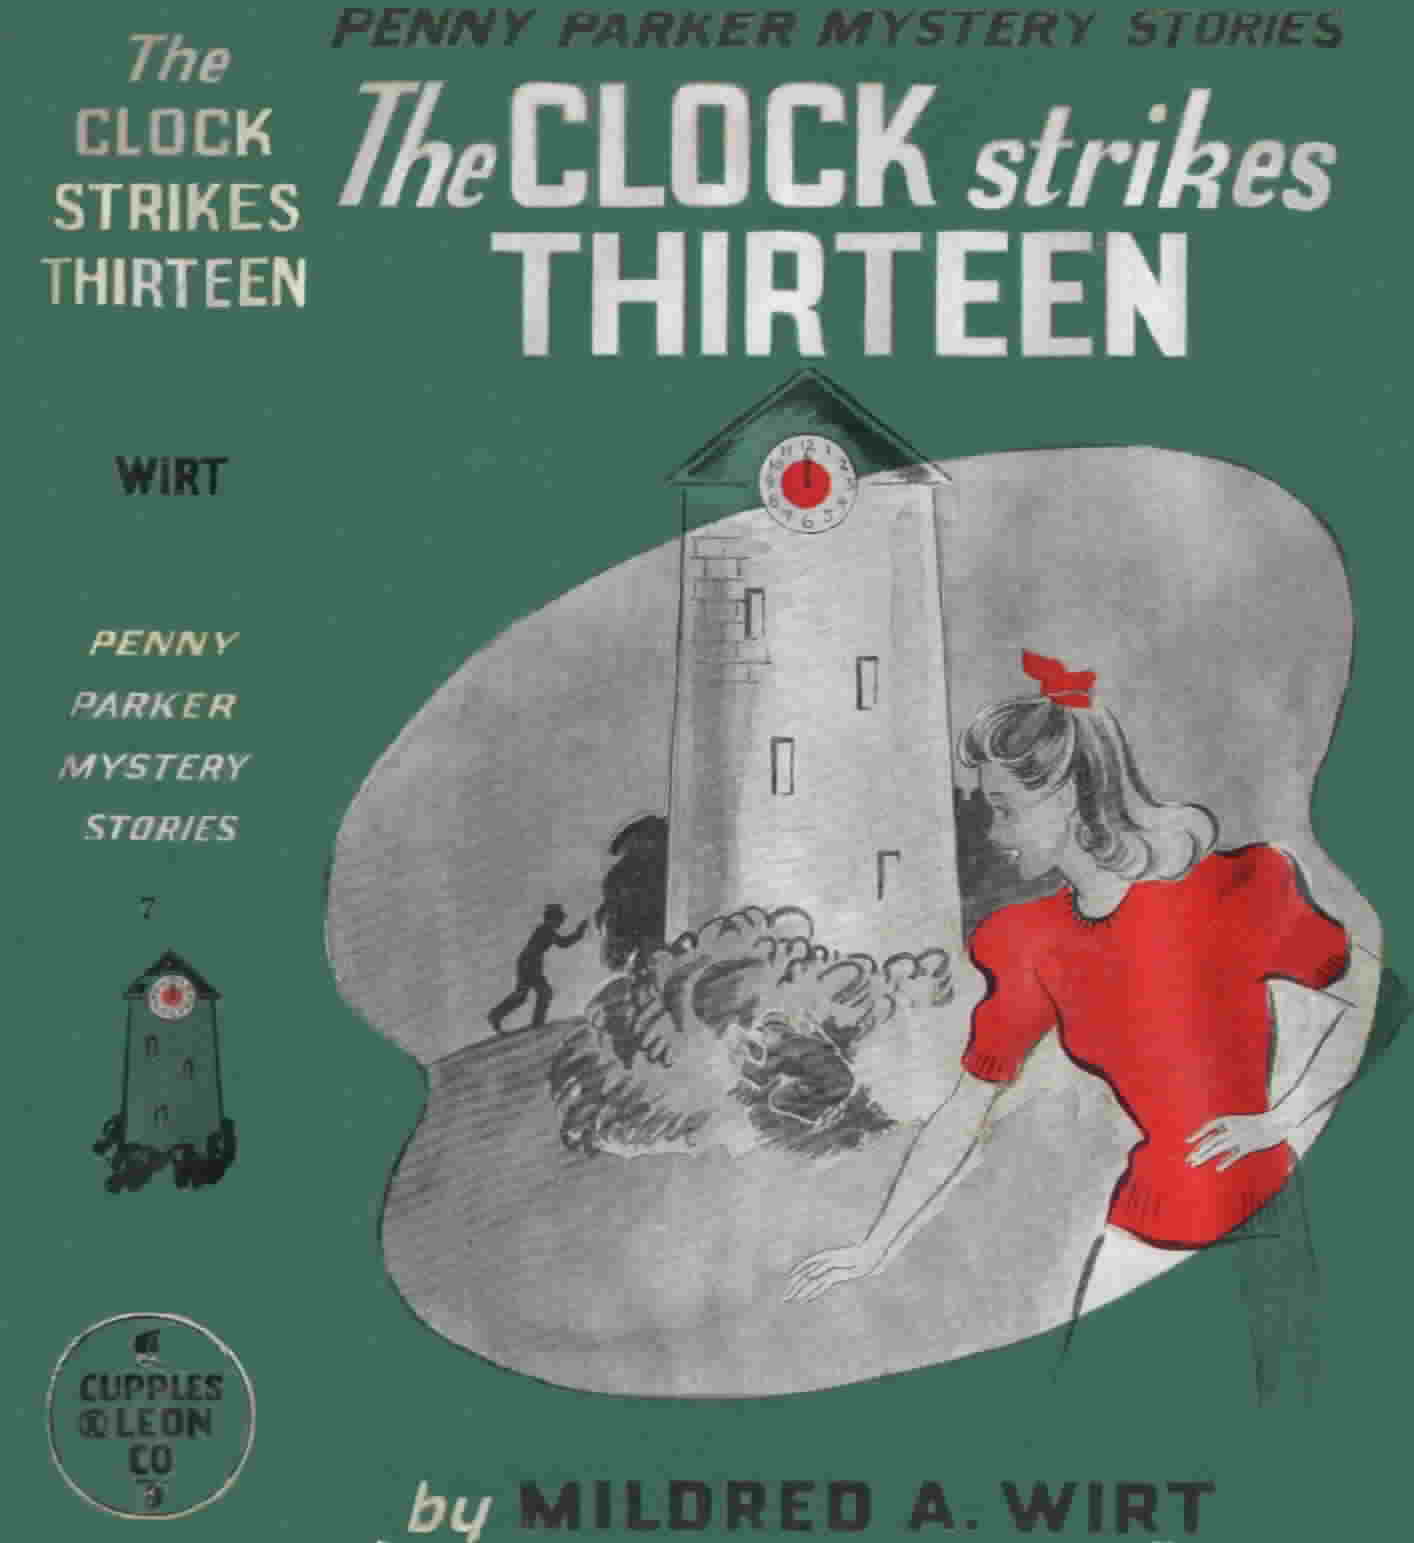 The Clock Strikes Thirteen